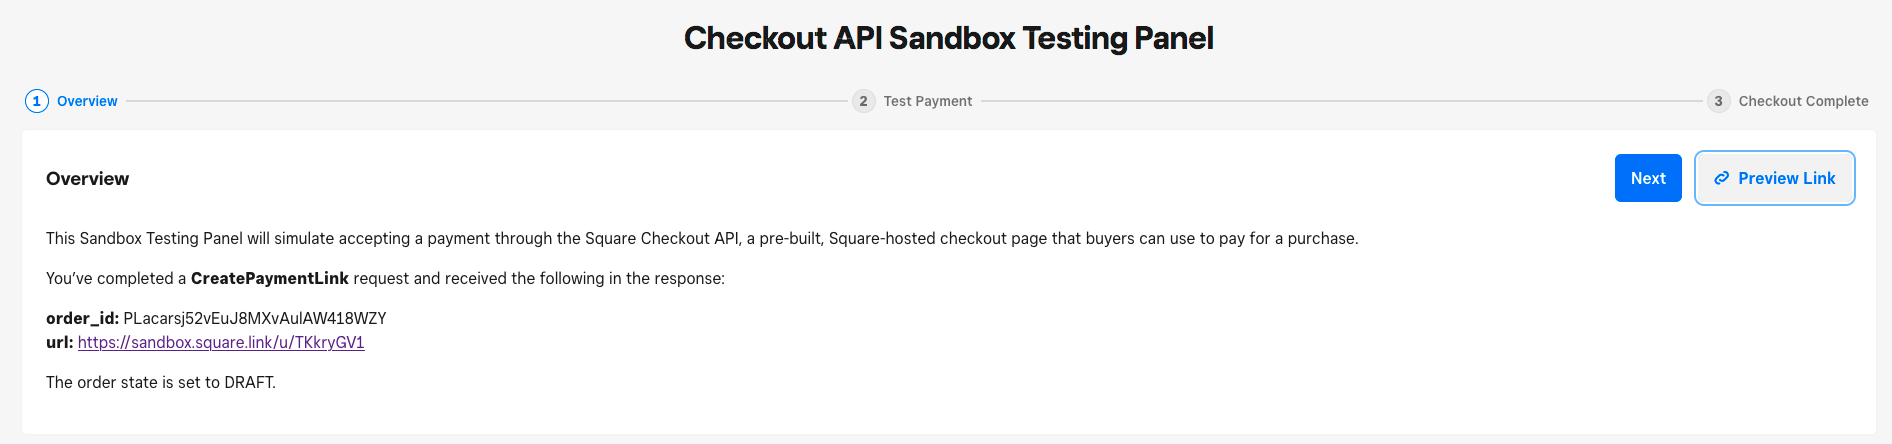 Square checkout api sandbox testing panel